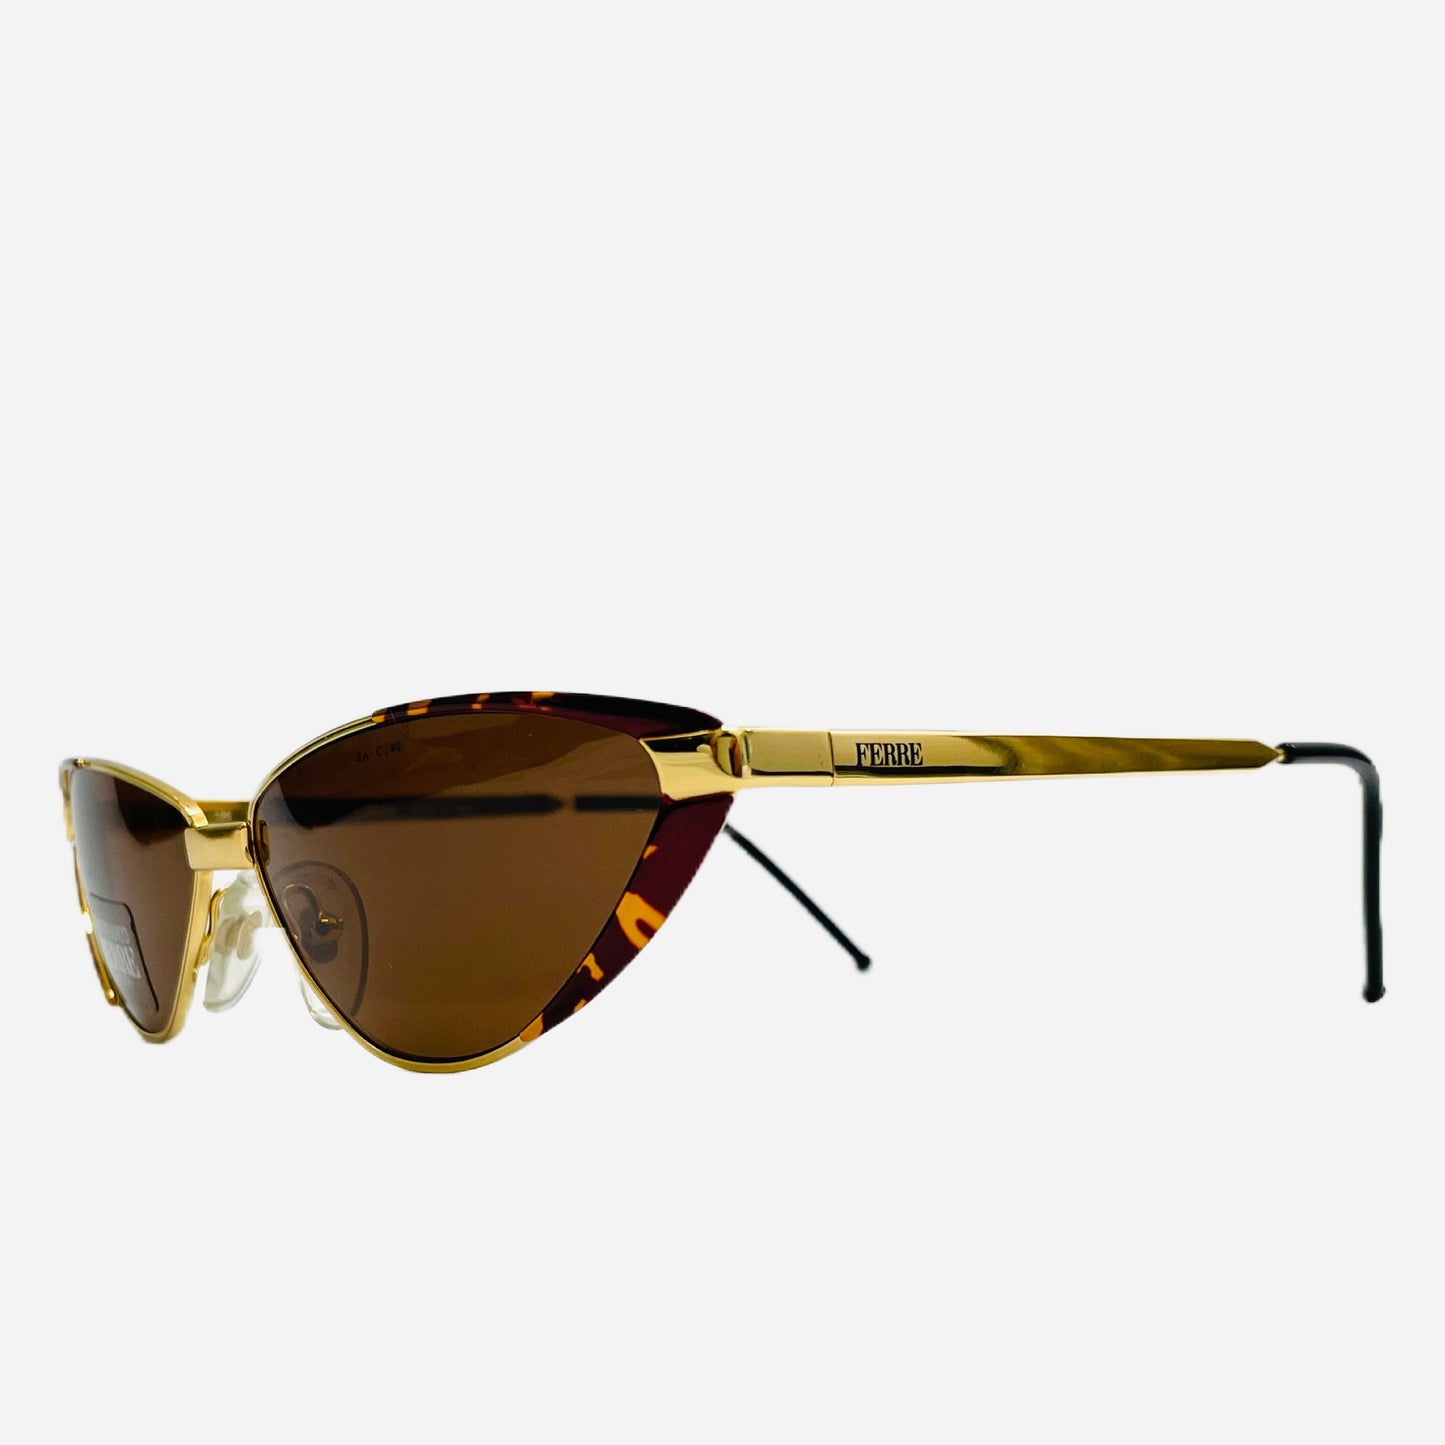 Vintage-Gianfranco-Ferre-Sonnenbrille-Sunglasses-GFF-149-The-Seekers-front-side-2